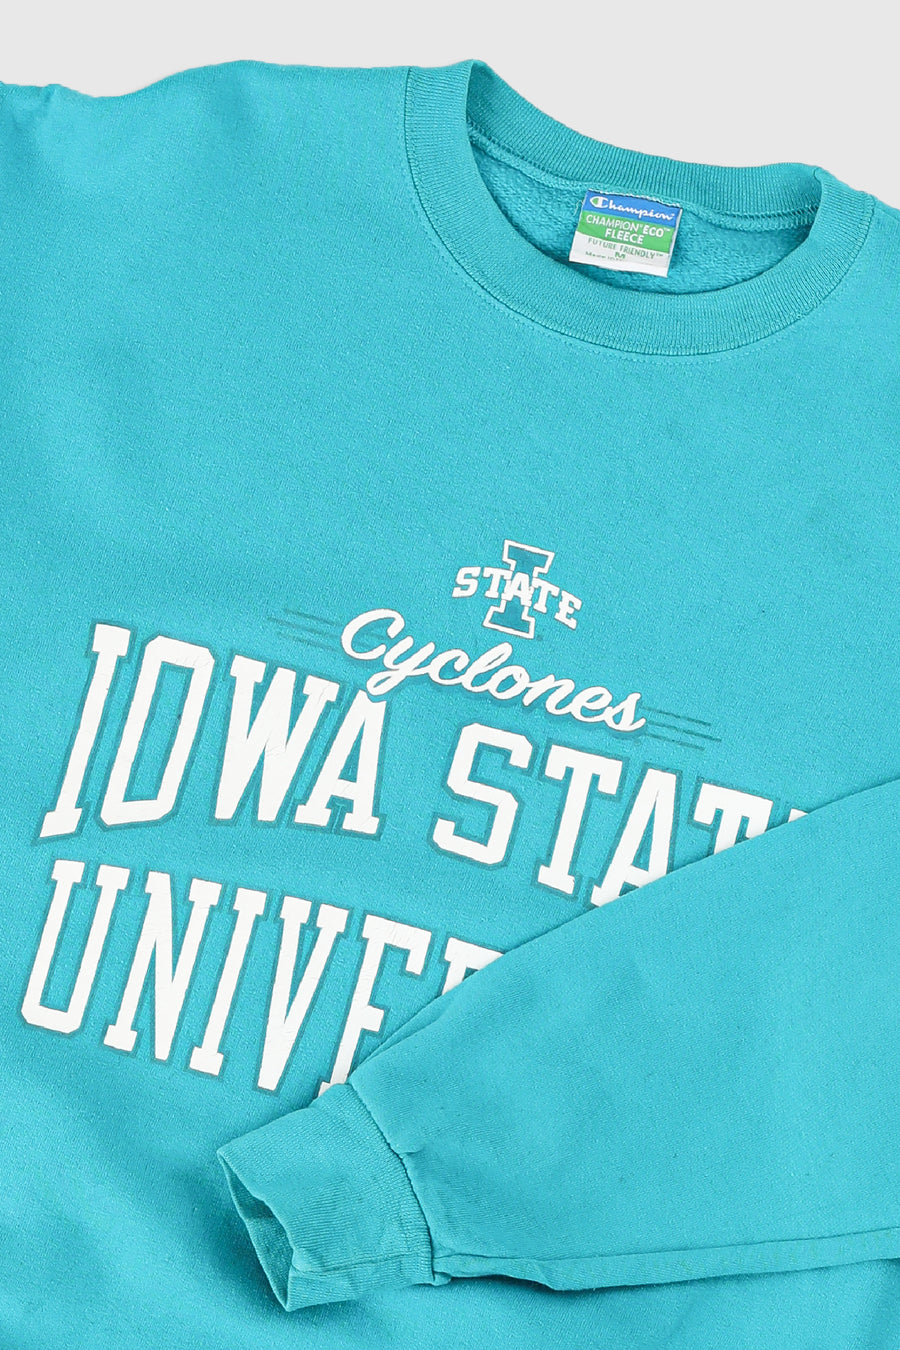 Vintage Iowa State University Sweatshirt